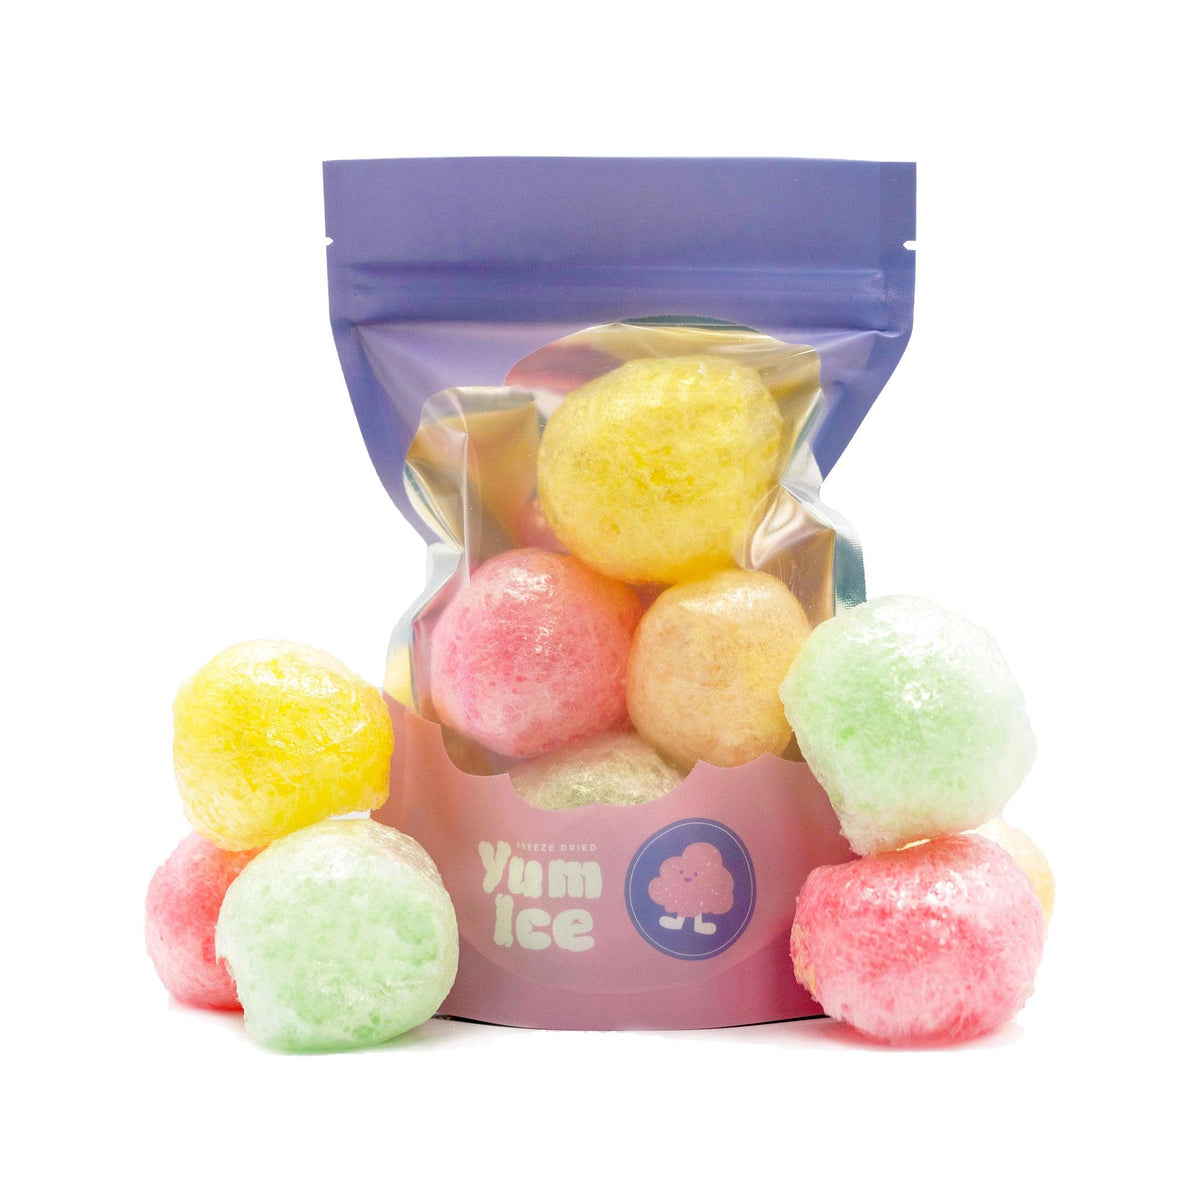 Freeze dried colorful Puff Balls – Chilitoloco